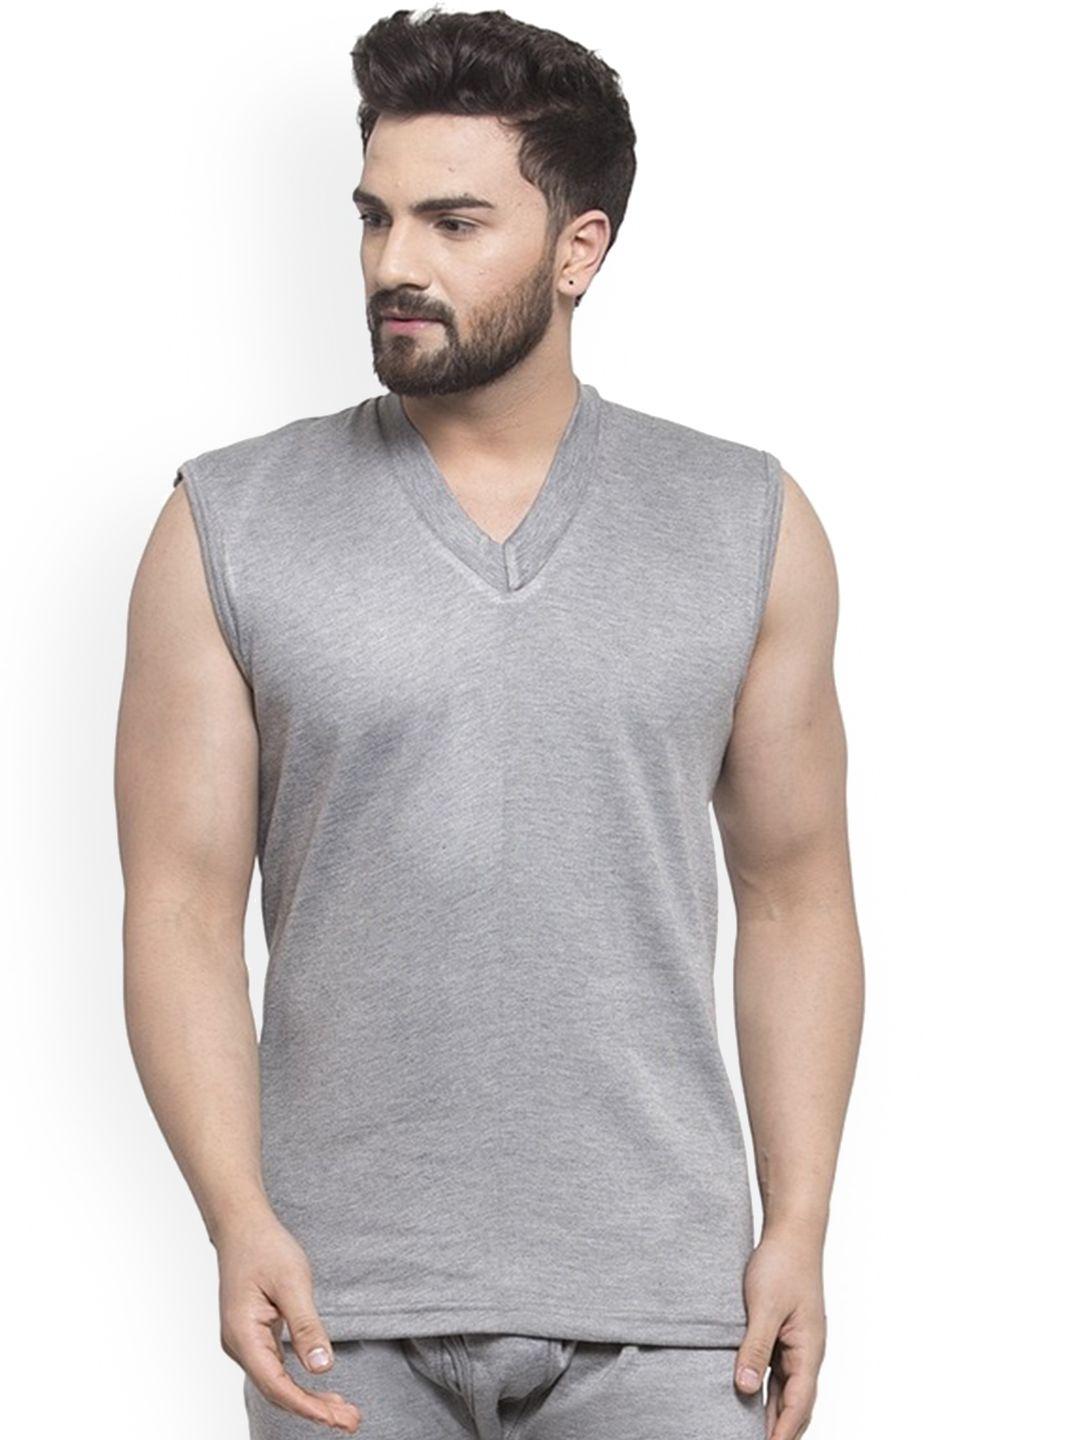 uzarus-v-neck-sleeveless-cotton-thermal-top